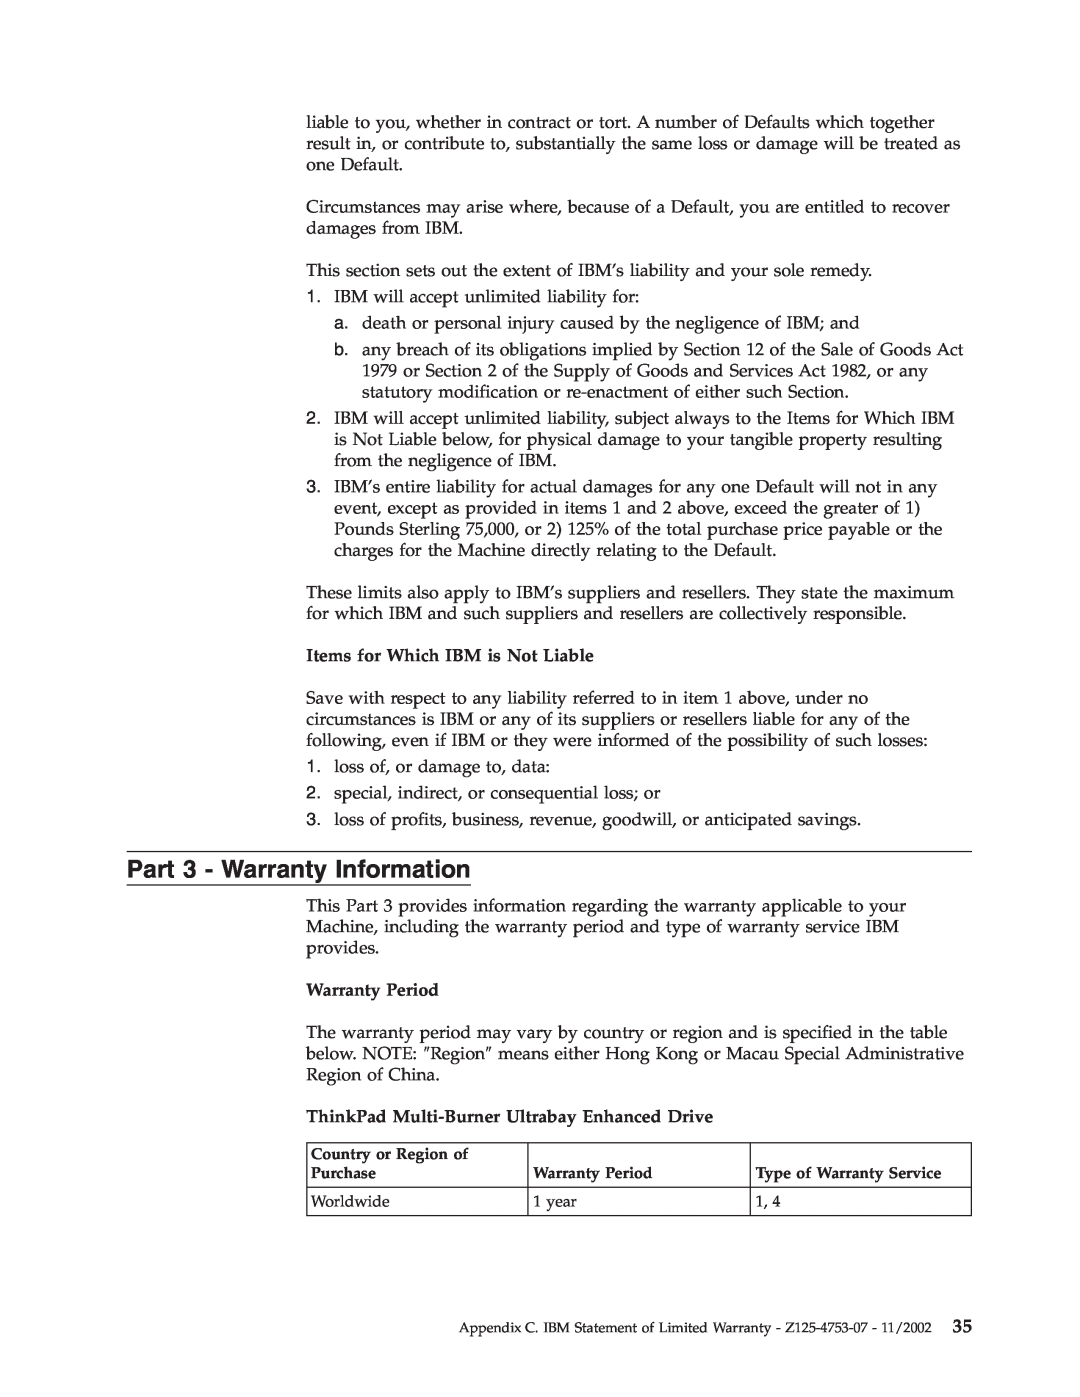 IBM 73P3279 Part 3 - Warranty Information, Warranty Period, ThinkPad Multi-Burner Ultrabay Enhanced Drive, Purchase, year 